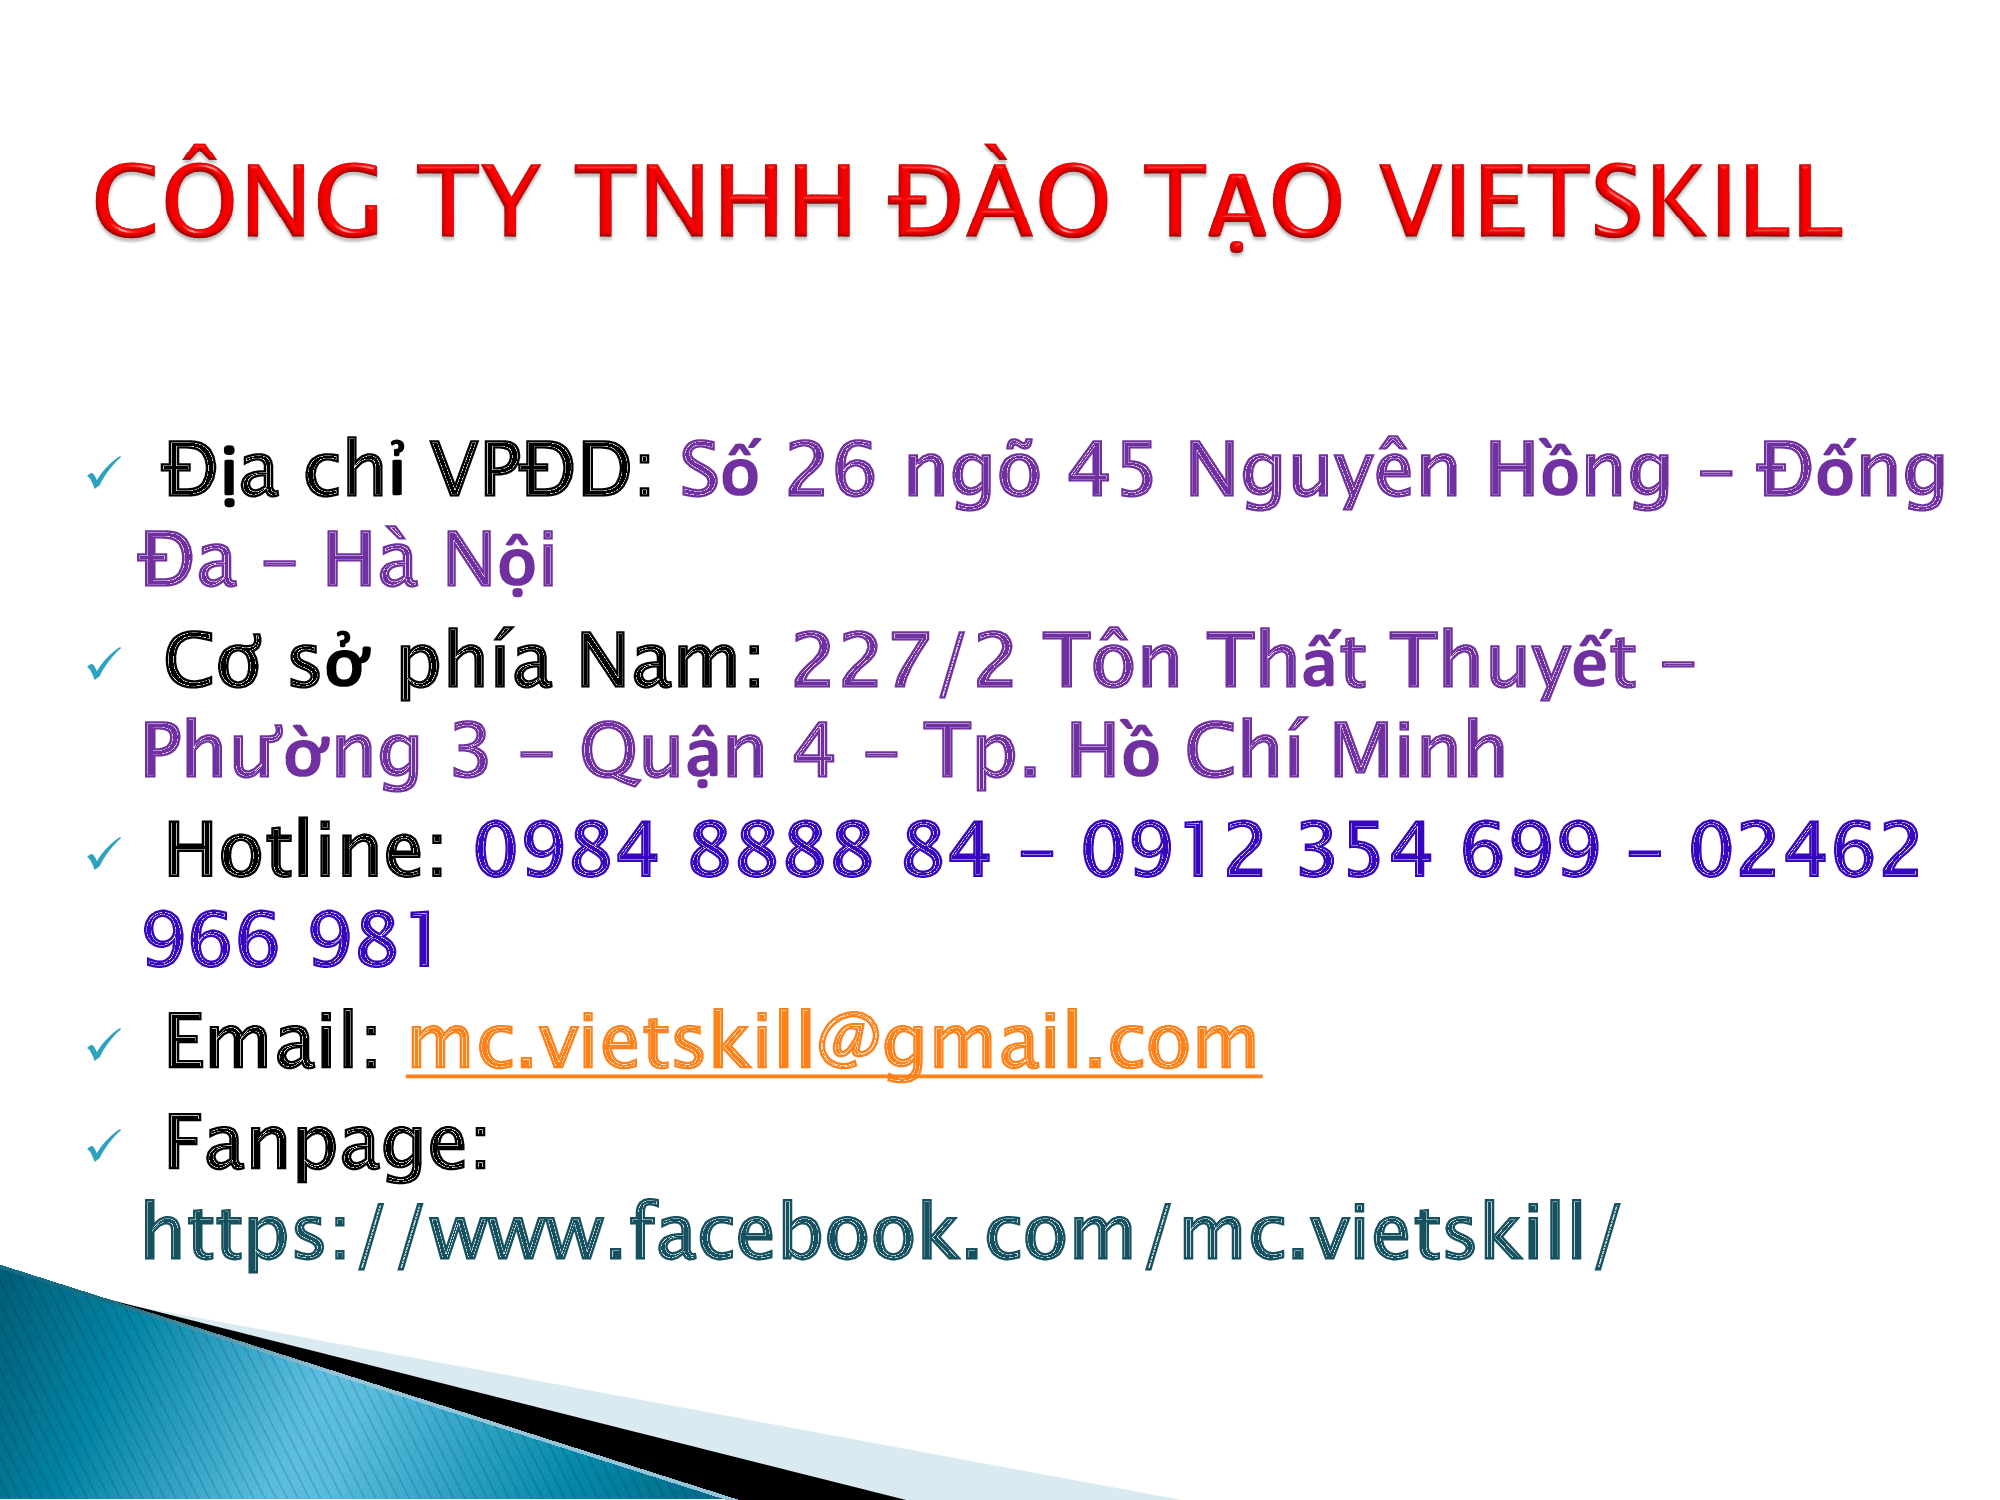 CHUONG-TRINH-DAO-TAO-KY-NANG-THUYET-TRINH-VIETSKILL-9.jpg